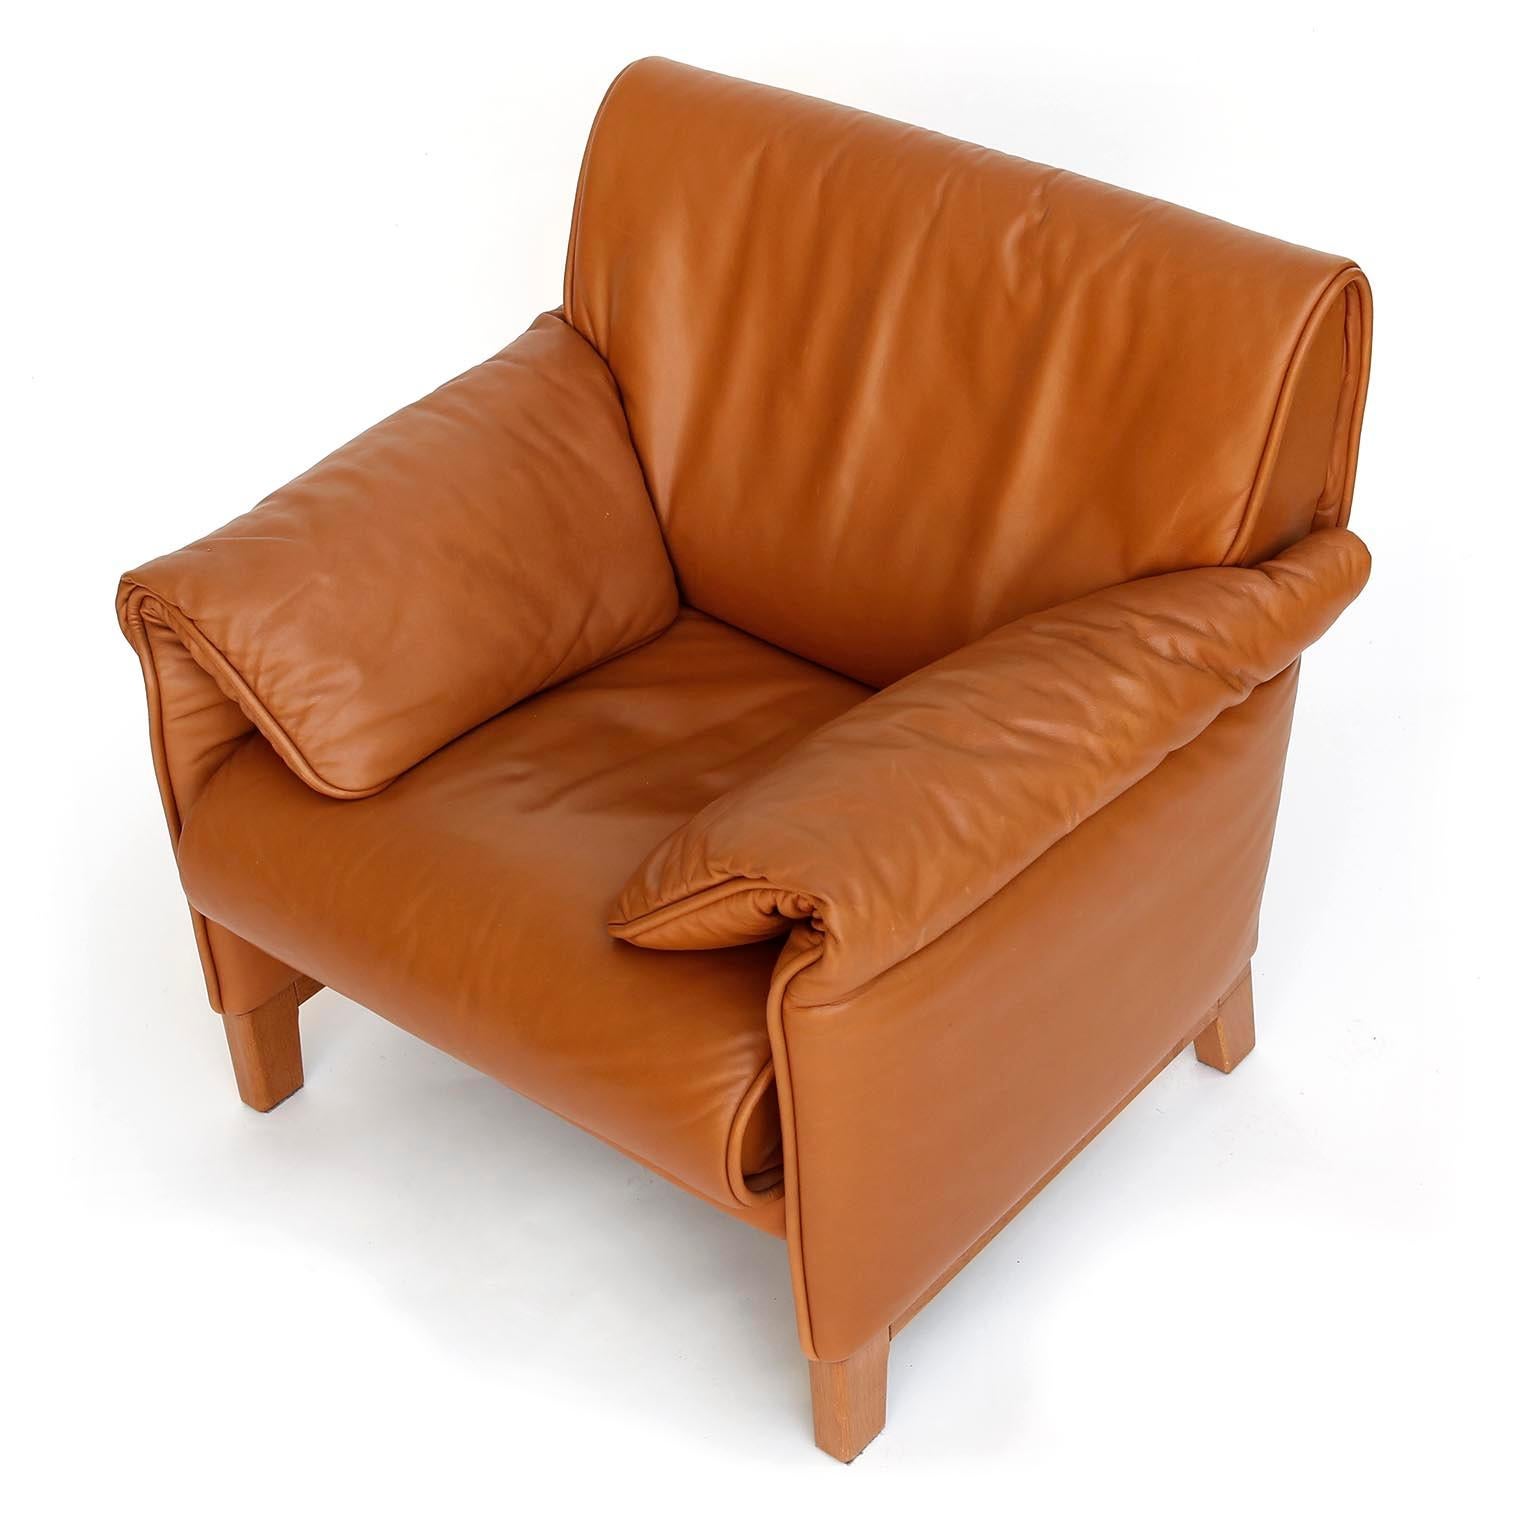 Swiss Four De Sede 'DS-14' Armchairs Lounge Chairs, Cognac Leather Teak, 1989 For Sale